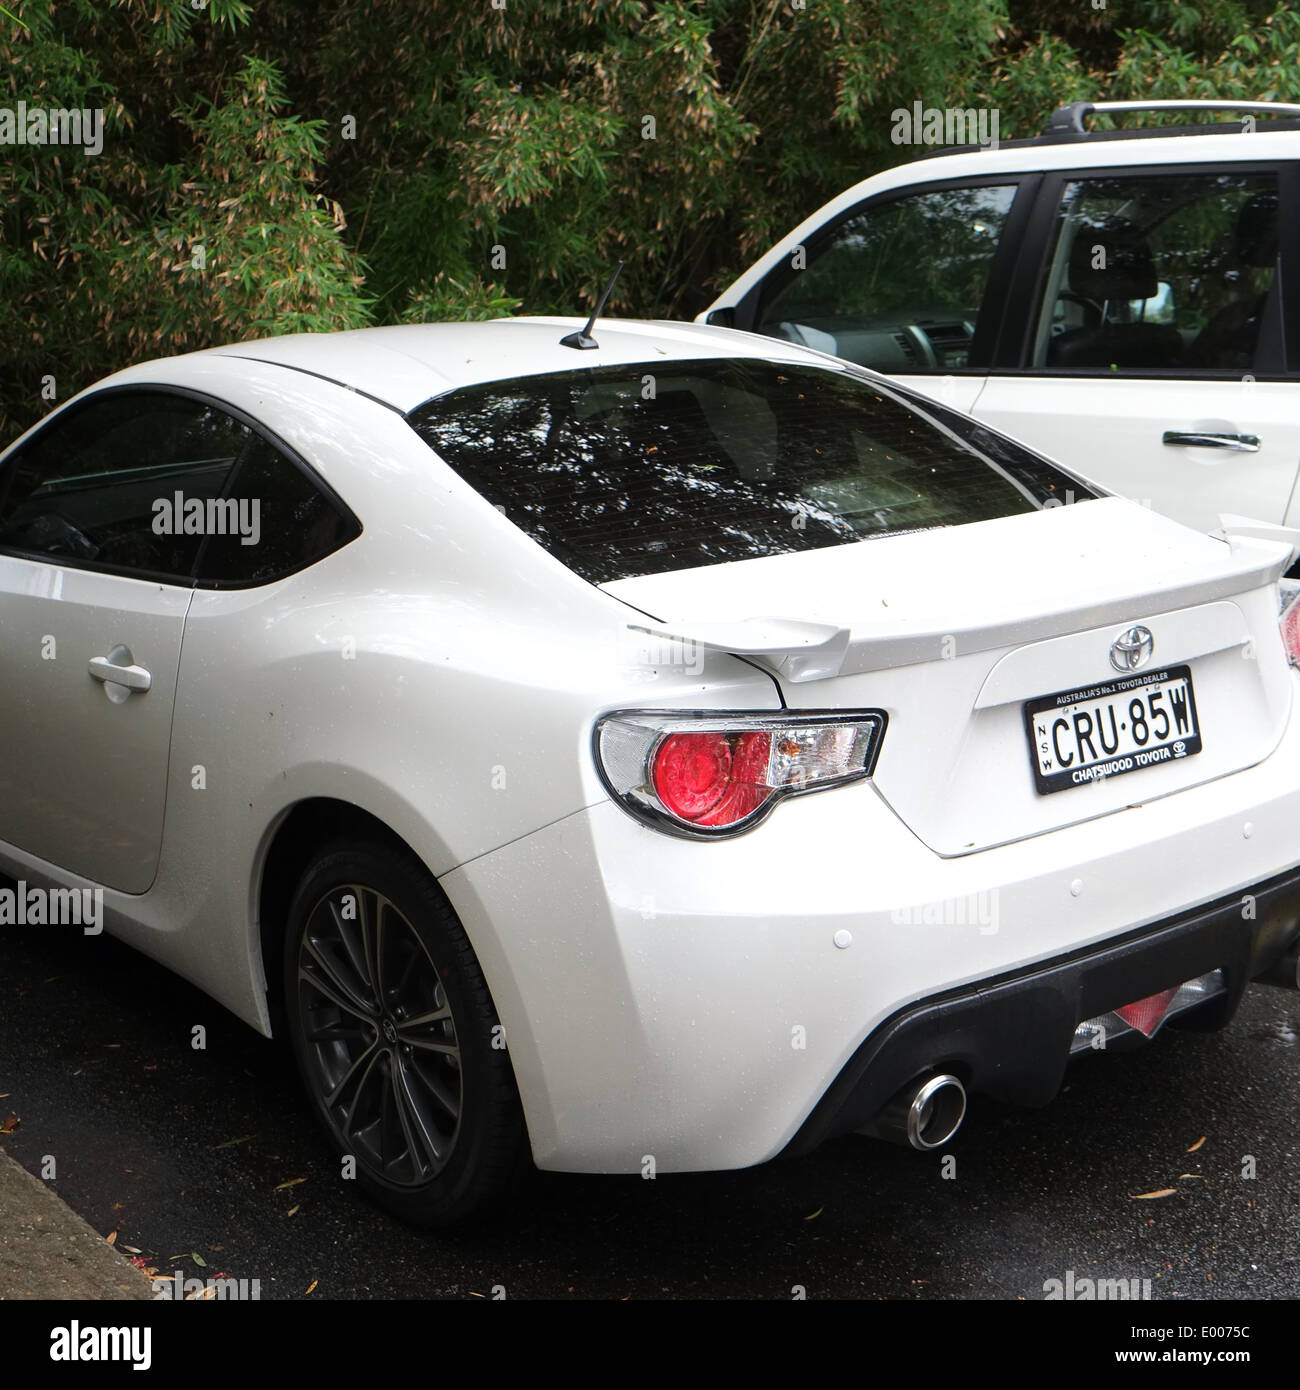 2 door white toyota sports car in sydney Stock Photo ...